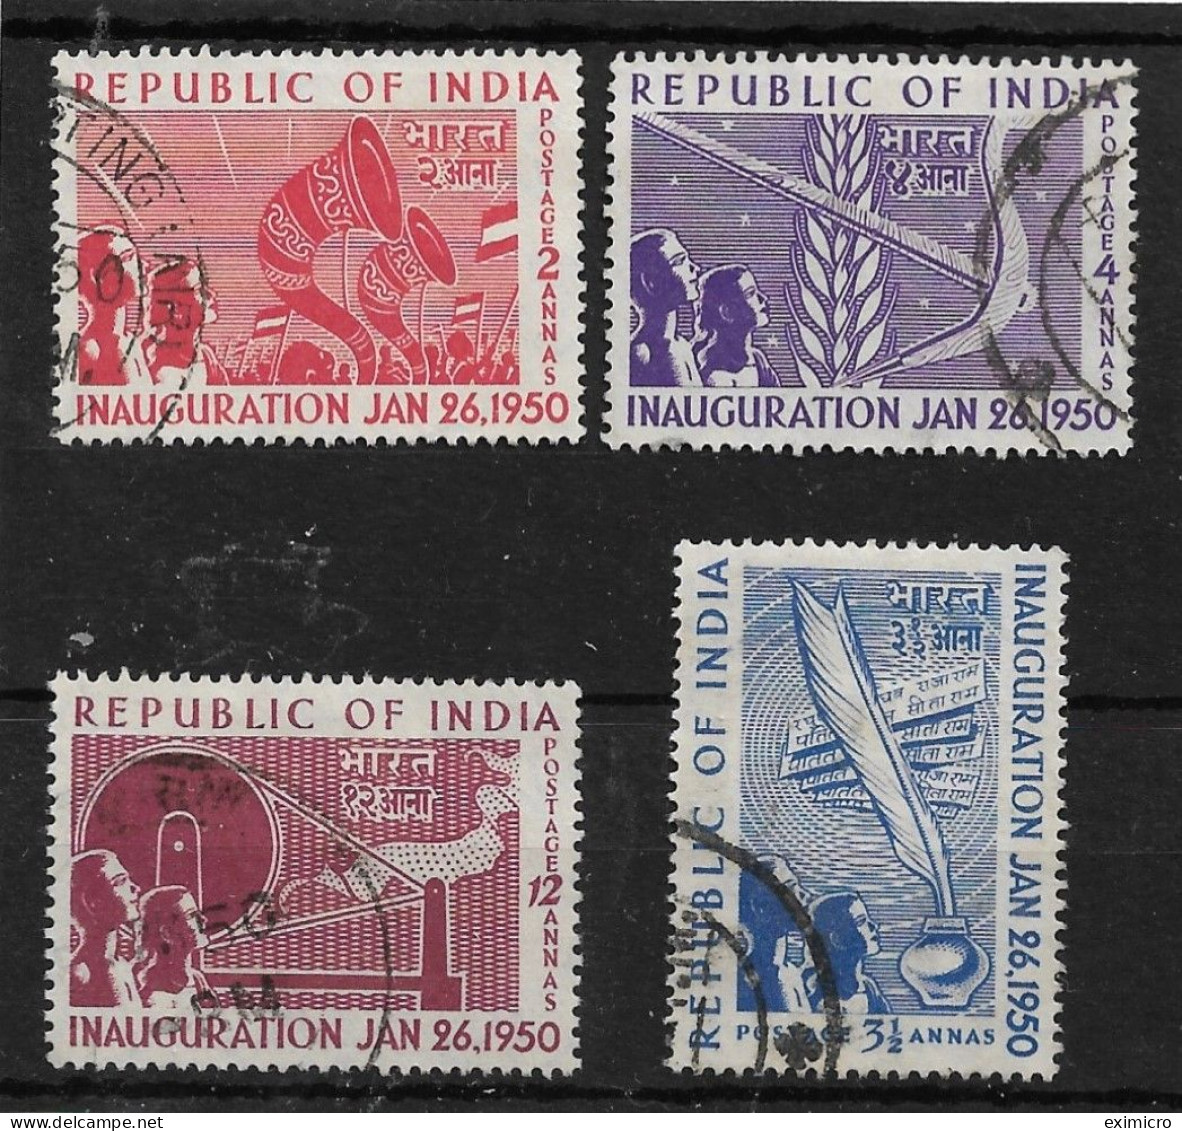 INDIA 1950 INAUGURATION OF REPUBLIC SET SG 329/332 FINE USED Cat £17 - Usados